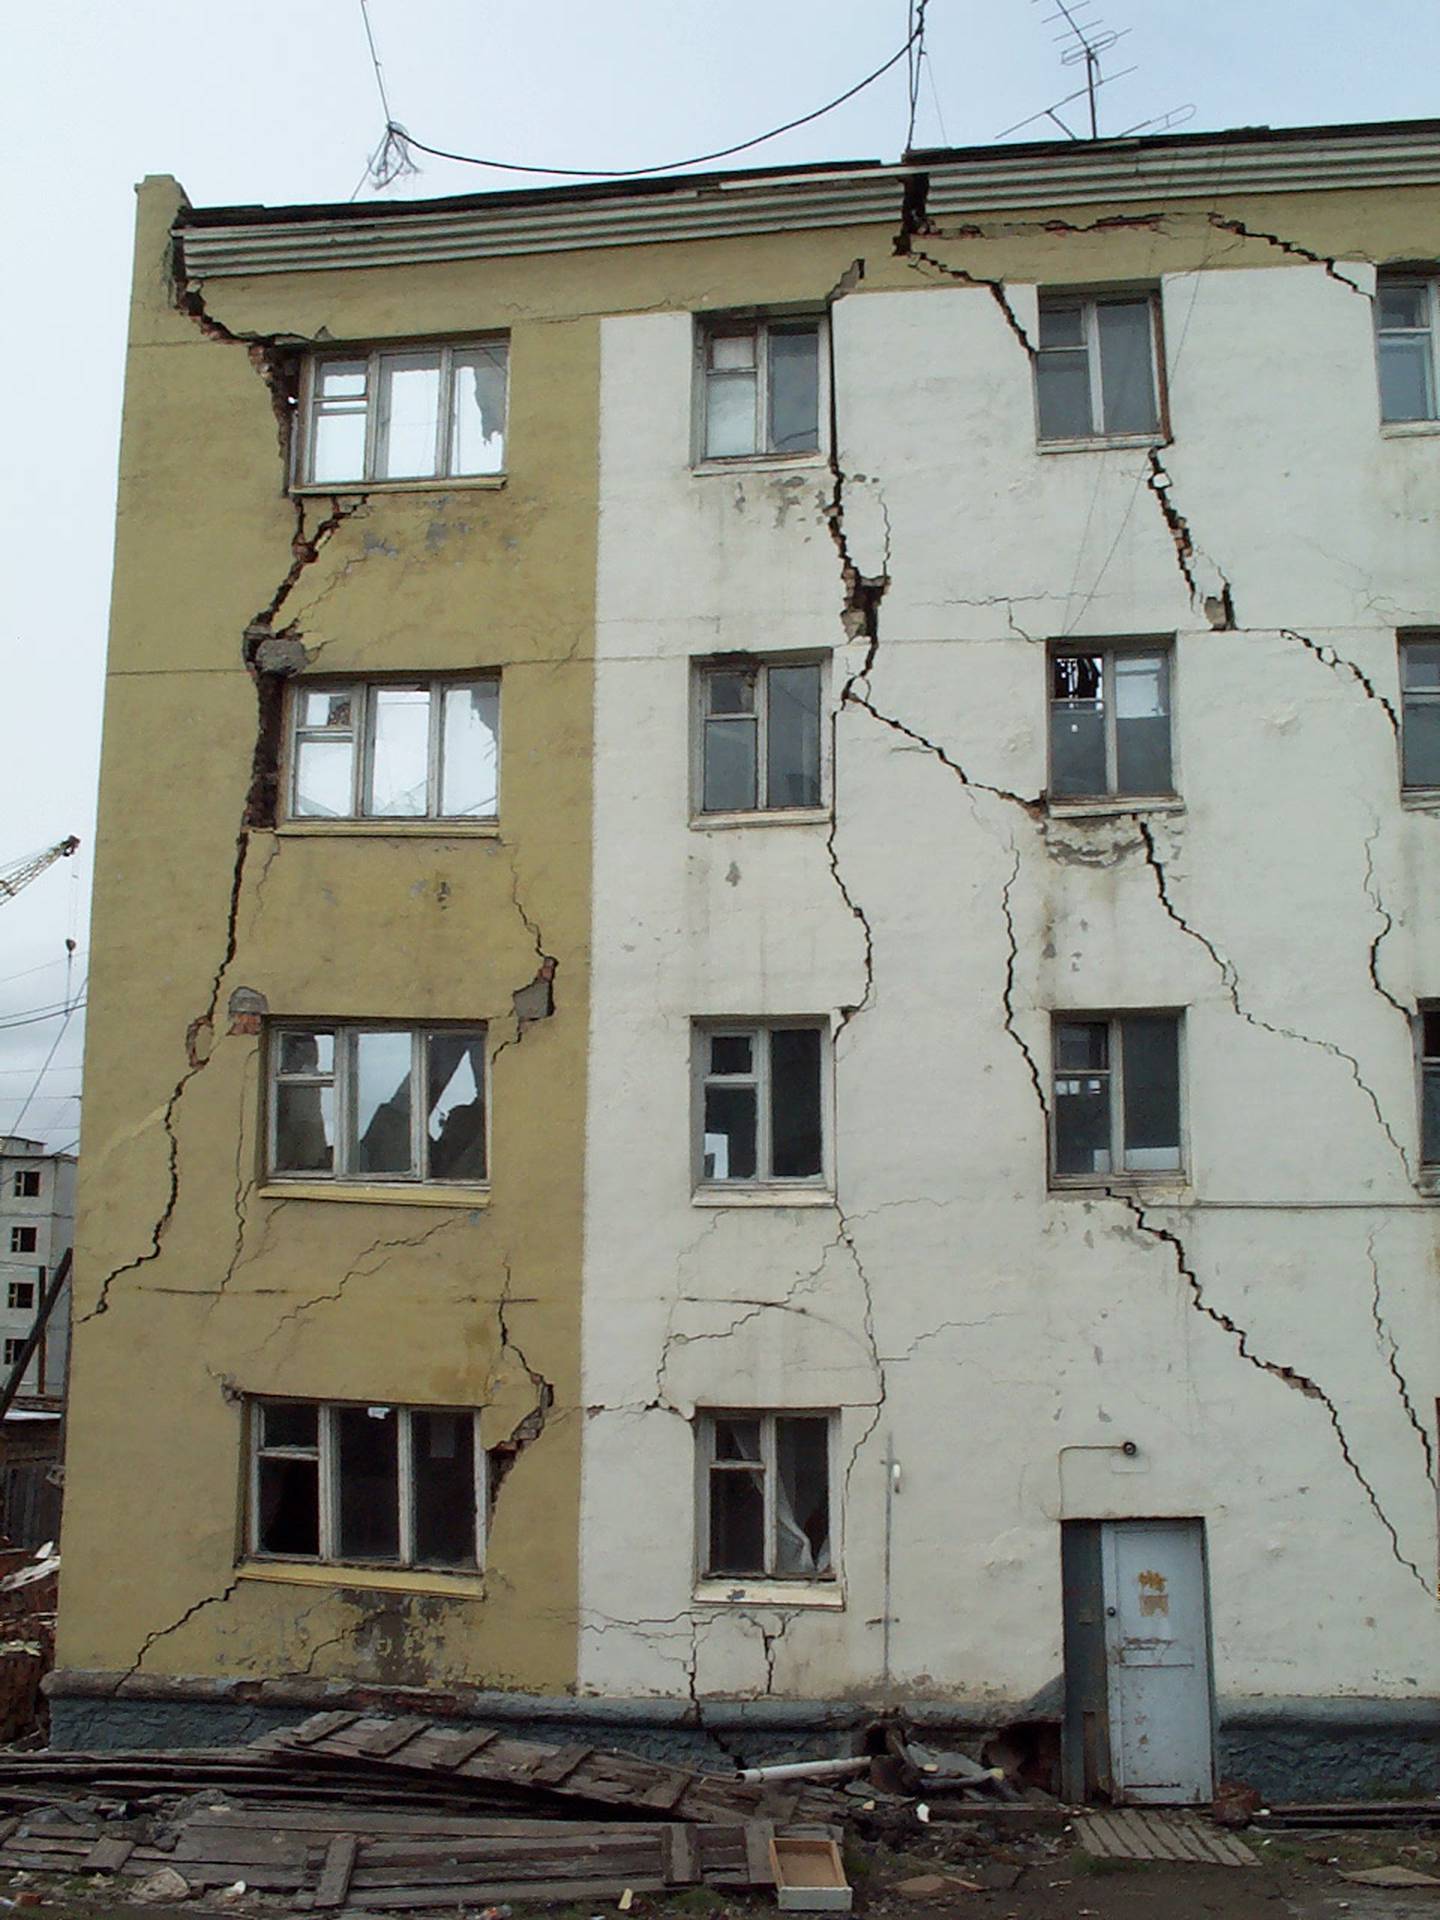 A building in Cherskiy, Siberia